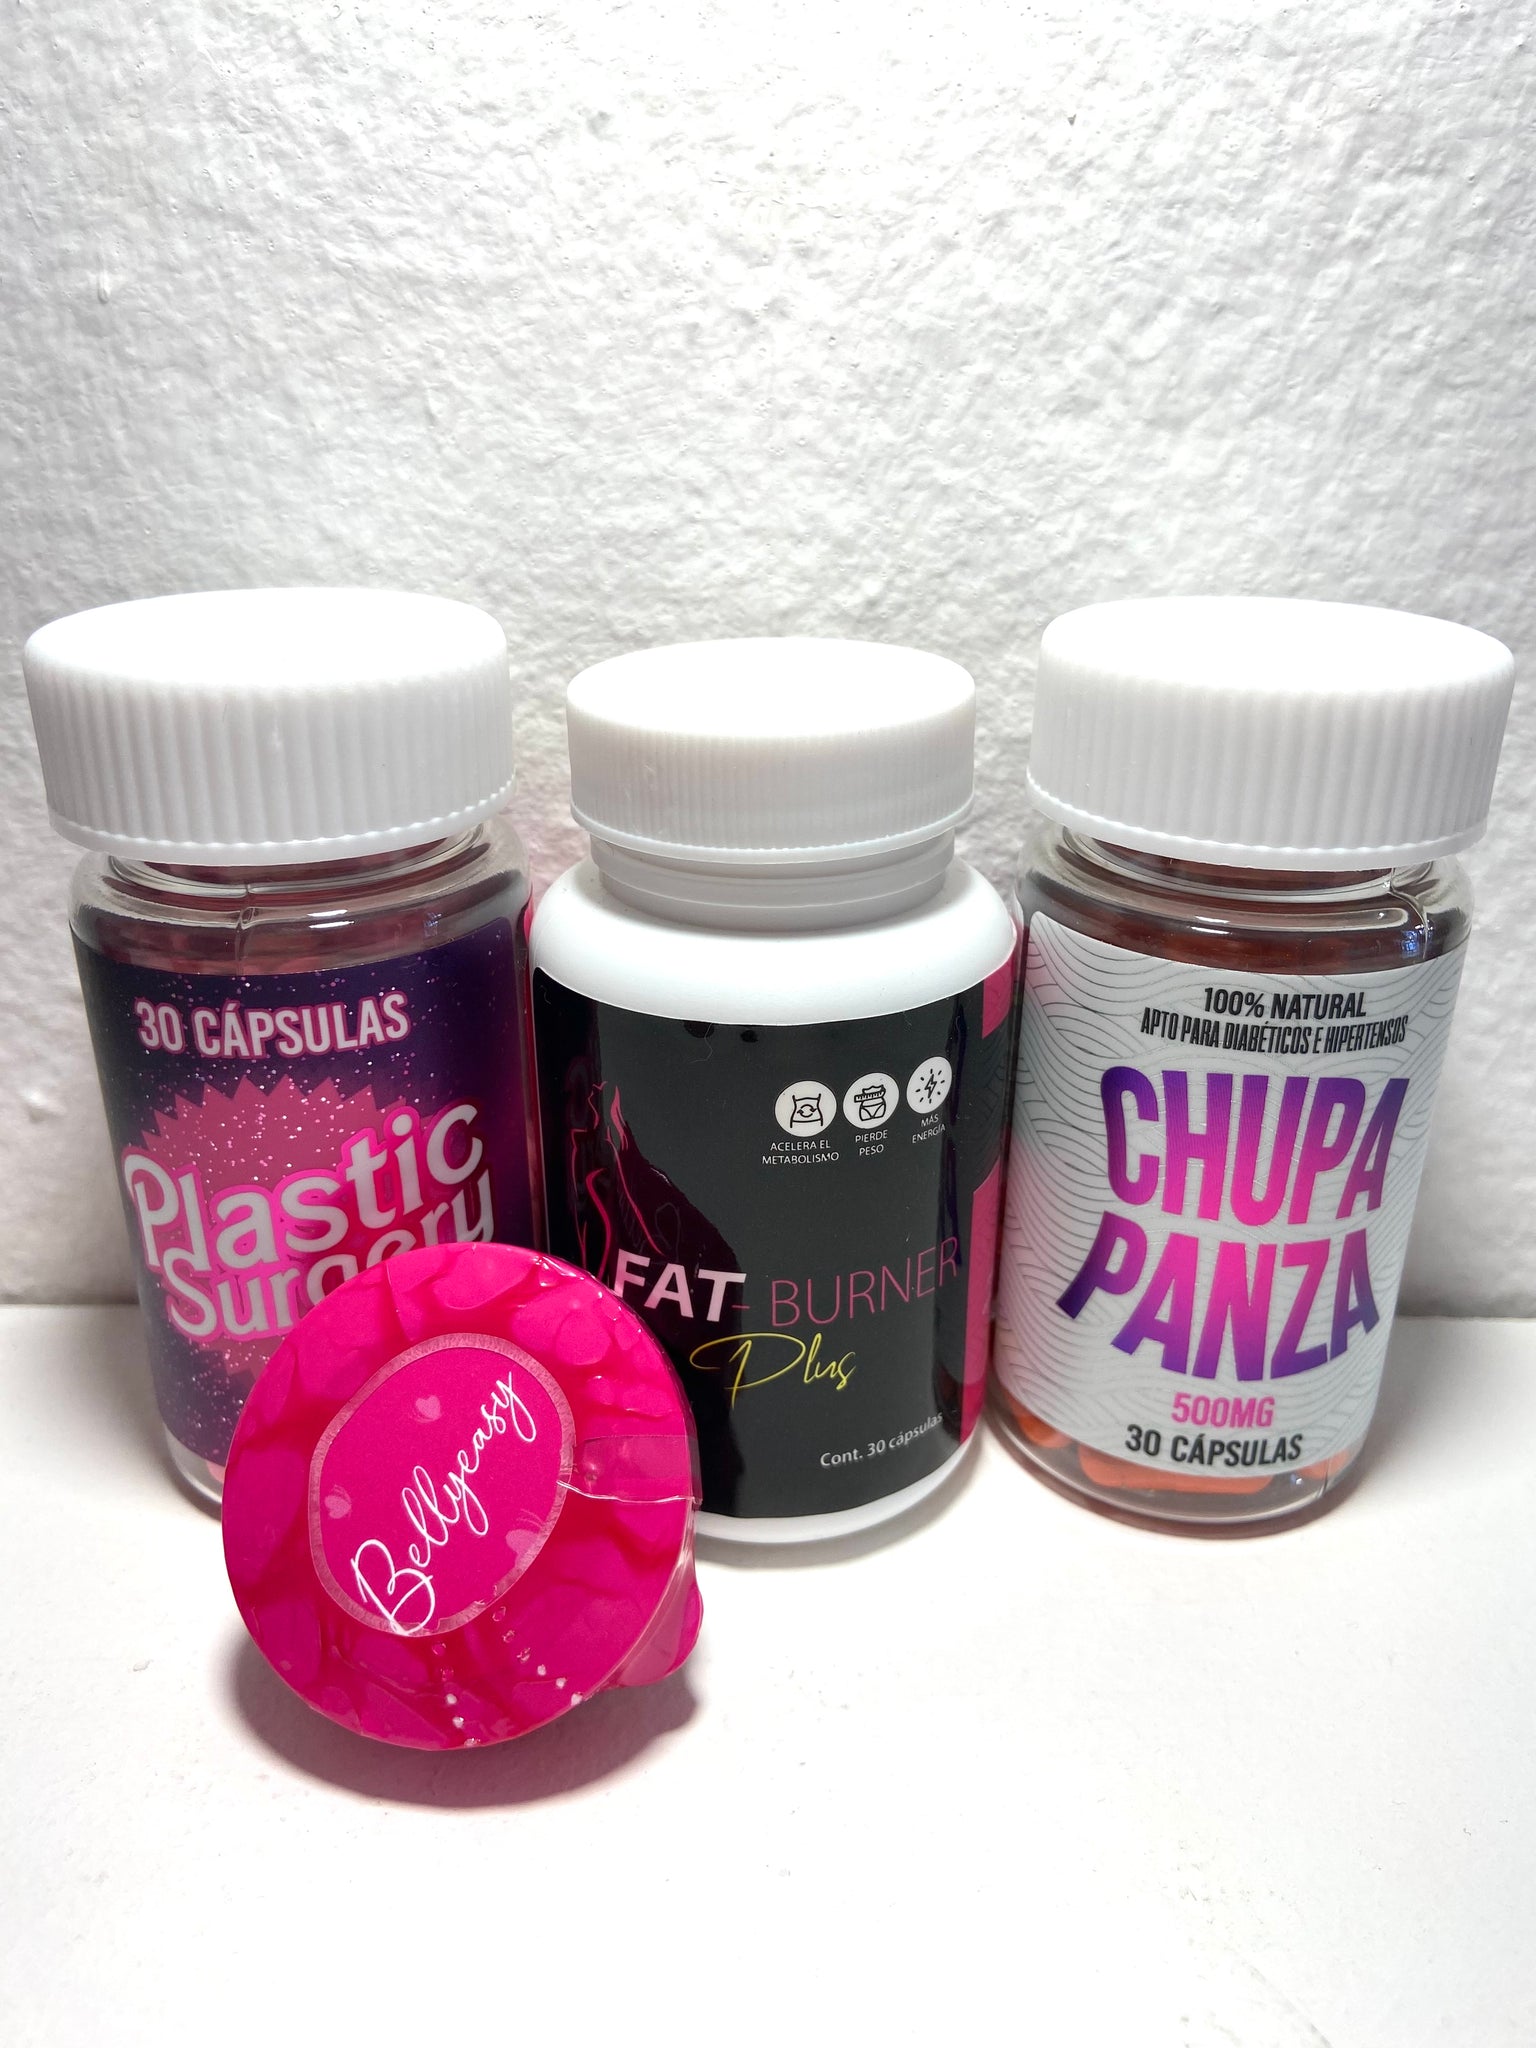 Kit Glow Xtreme ✨ Plastic Surgery + Fat Burner Plus + Chupa Panza + Belly Detox